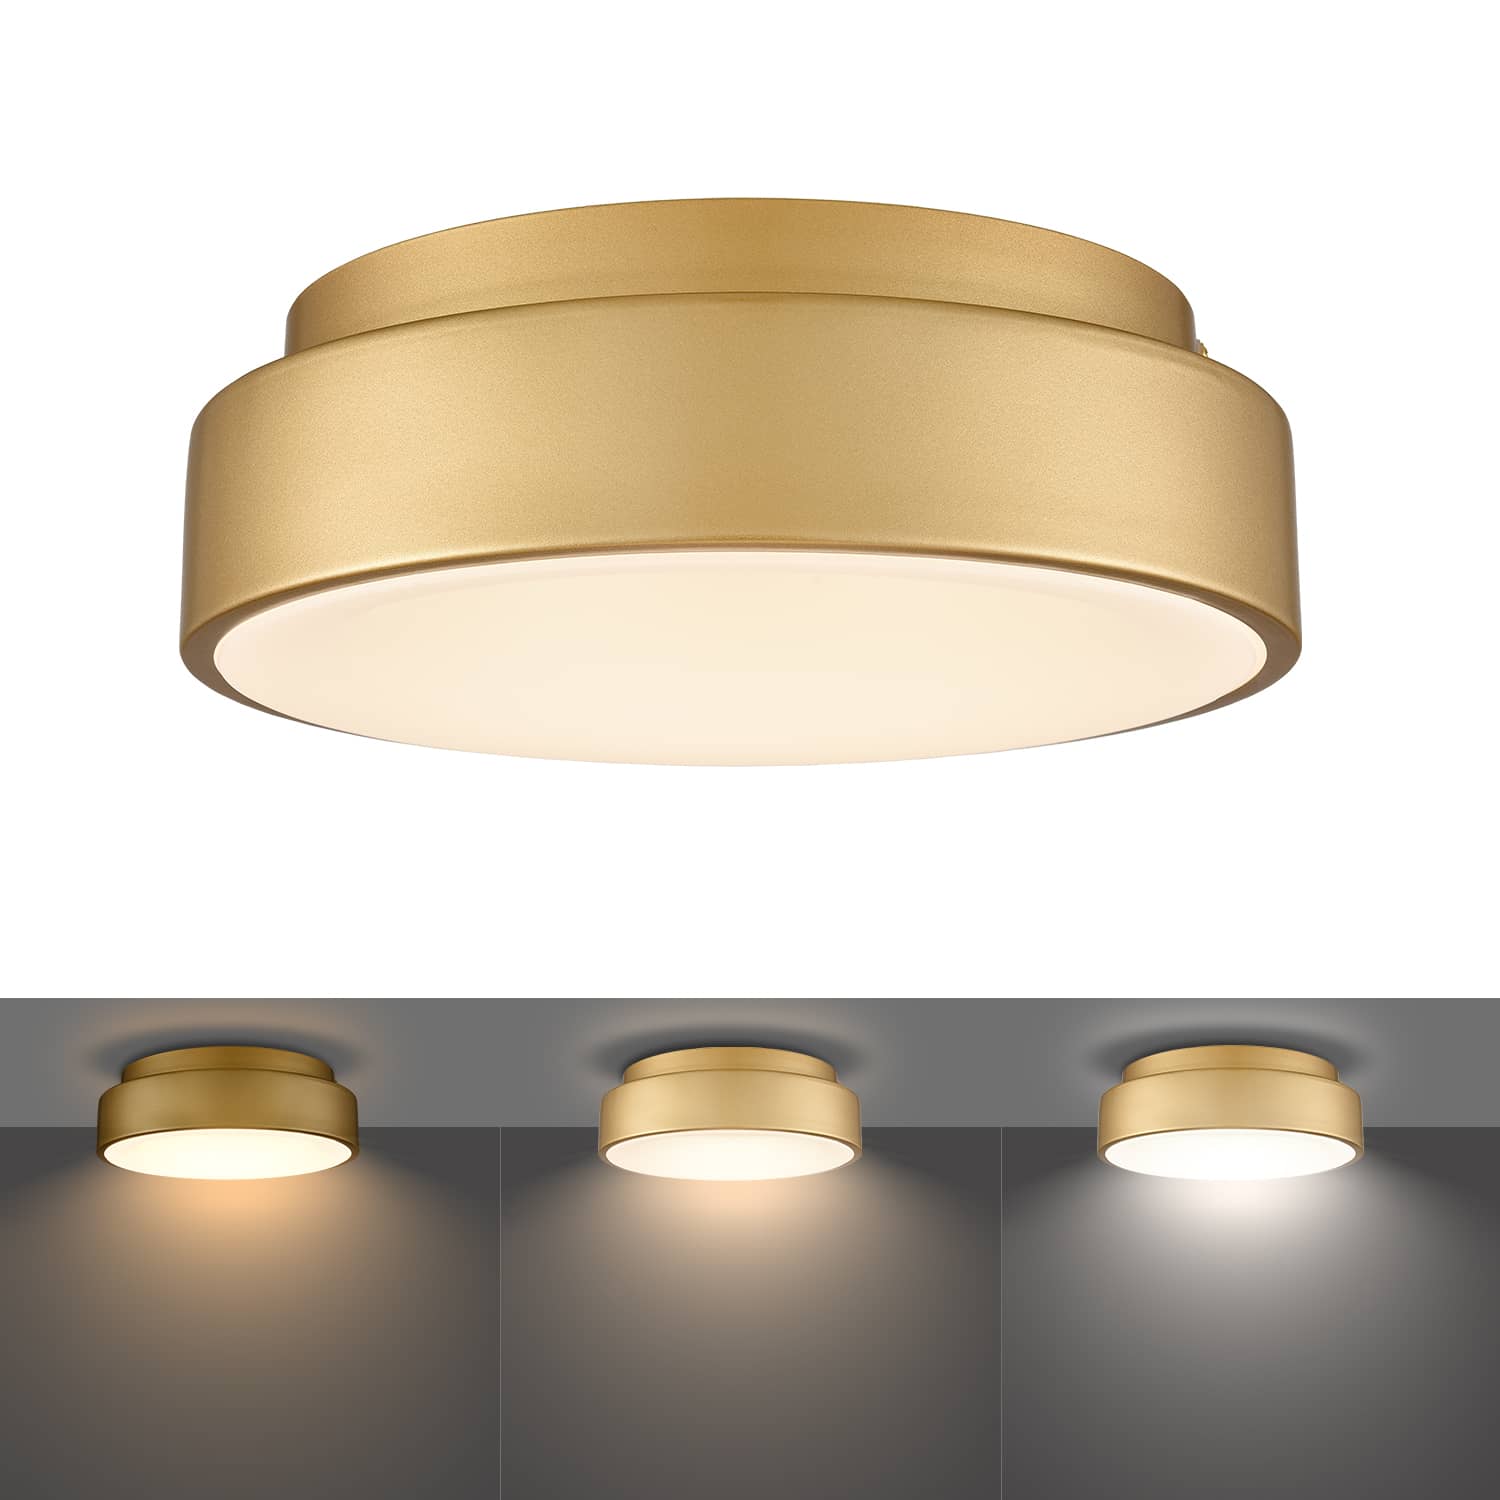  Dimmable 12 Inch LED Flush Mount Ceiling Light Brass